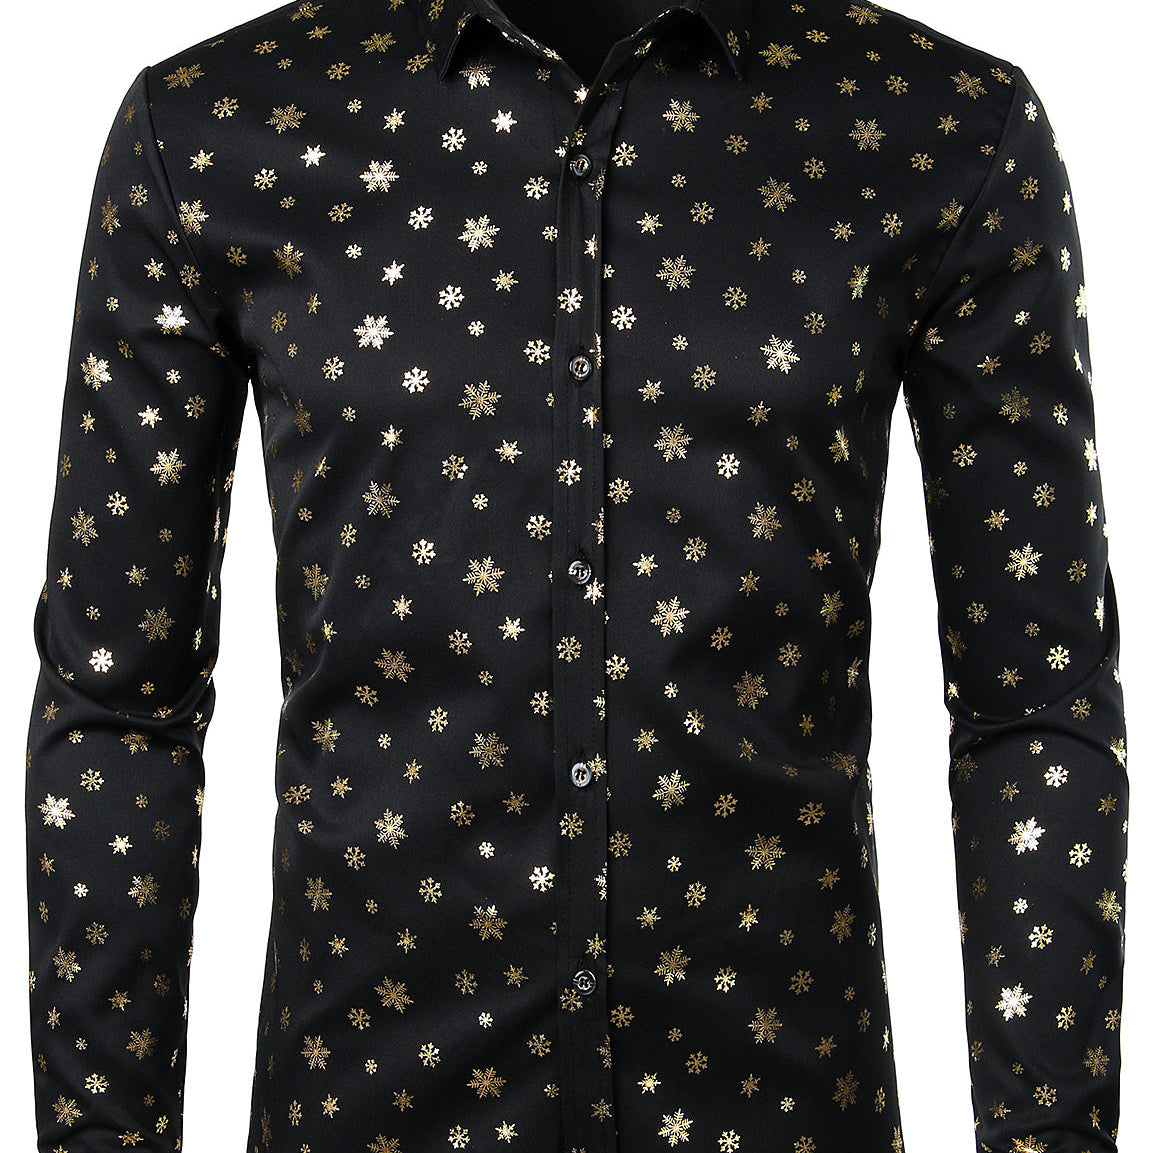 Men's Snowflake Print Long Sleeve Casual Button Up Shirt